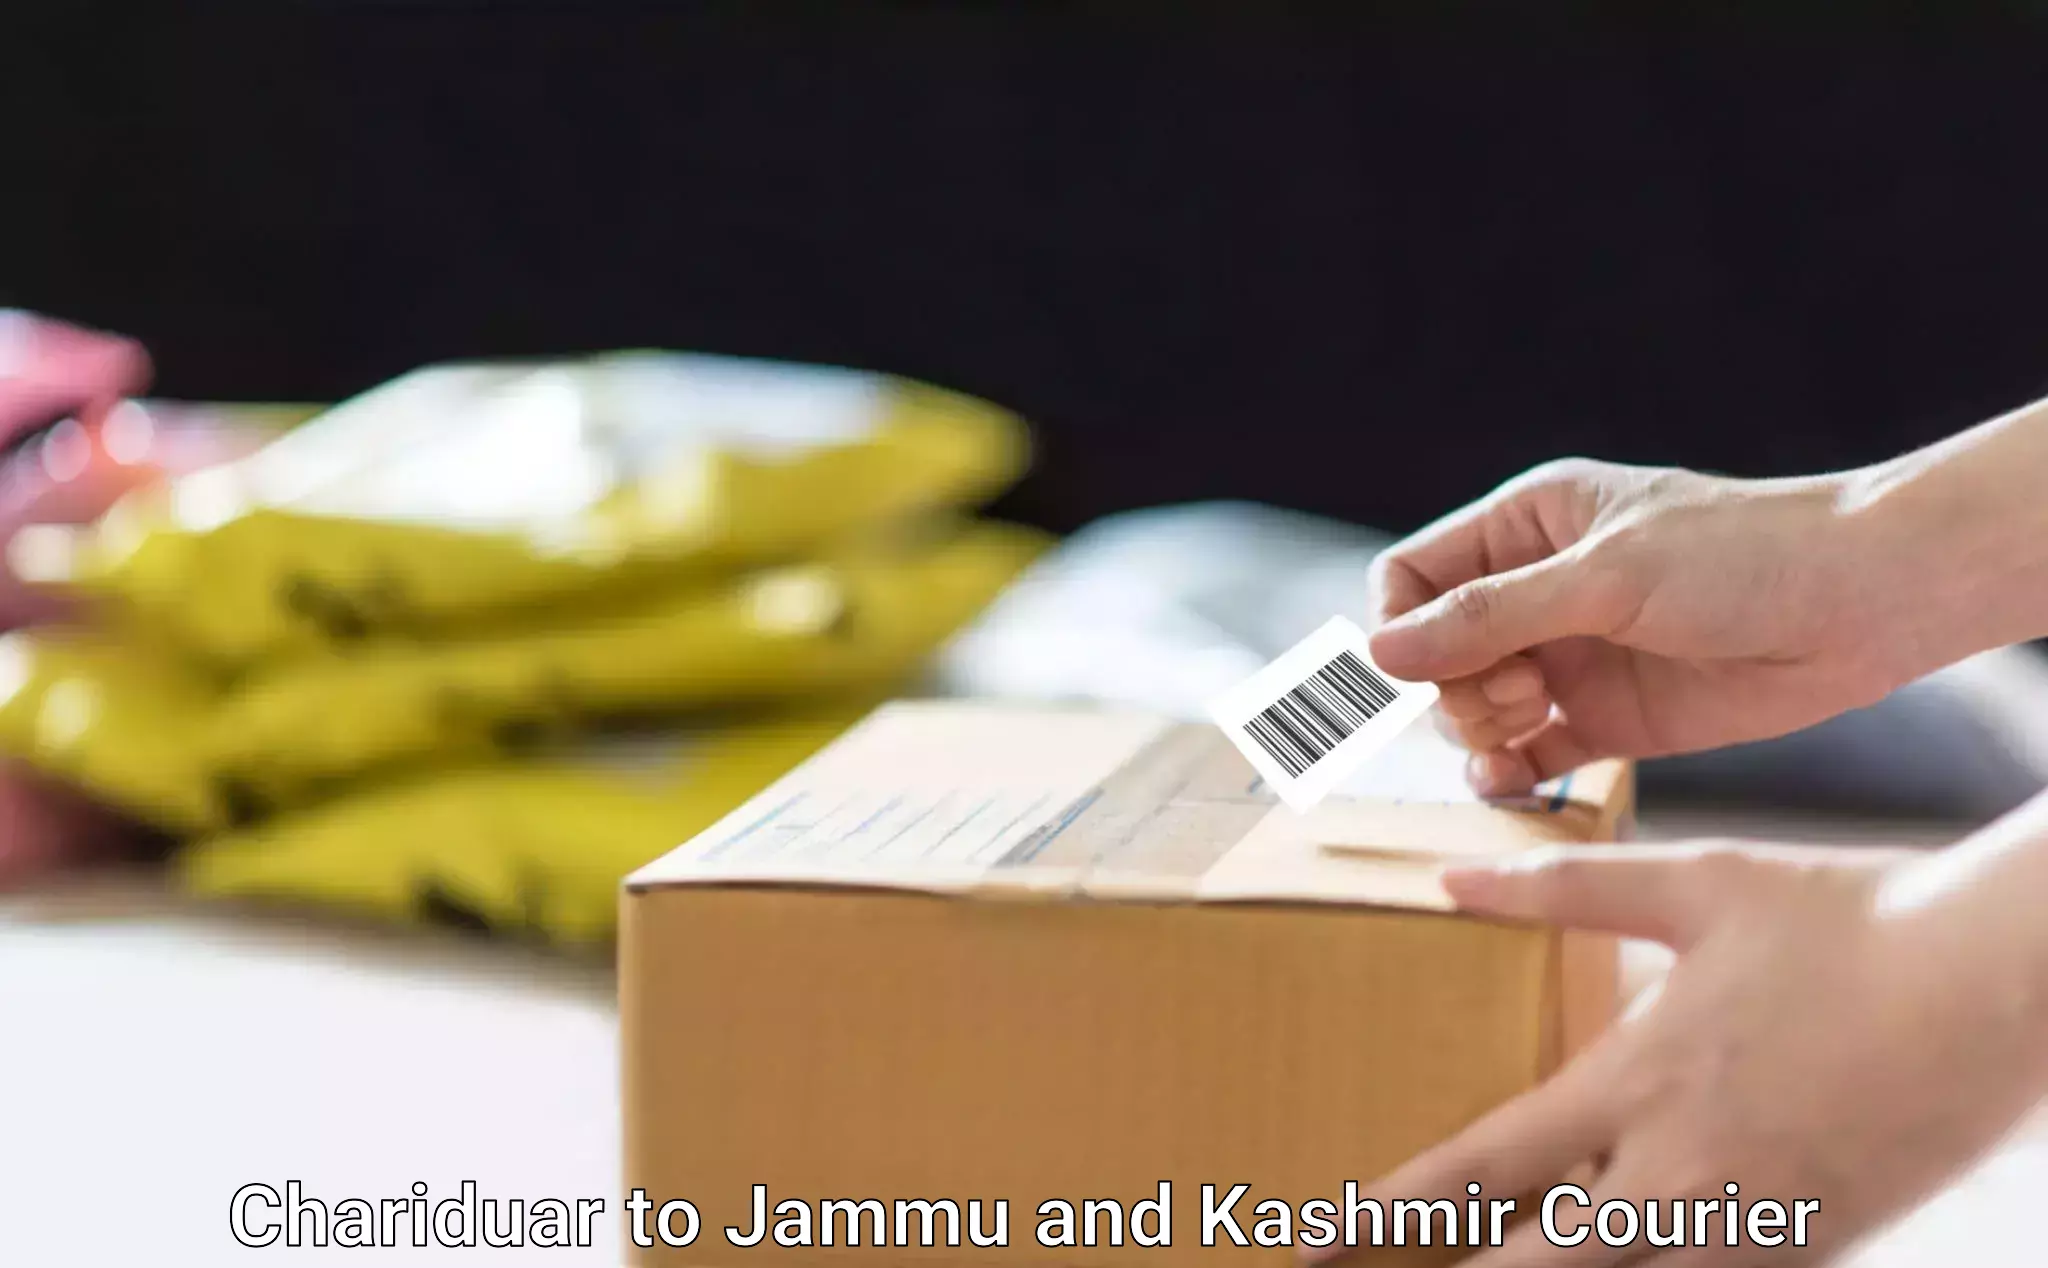 Custom courier packaging Chariduar to Jammu and Kashmir